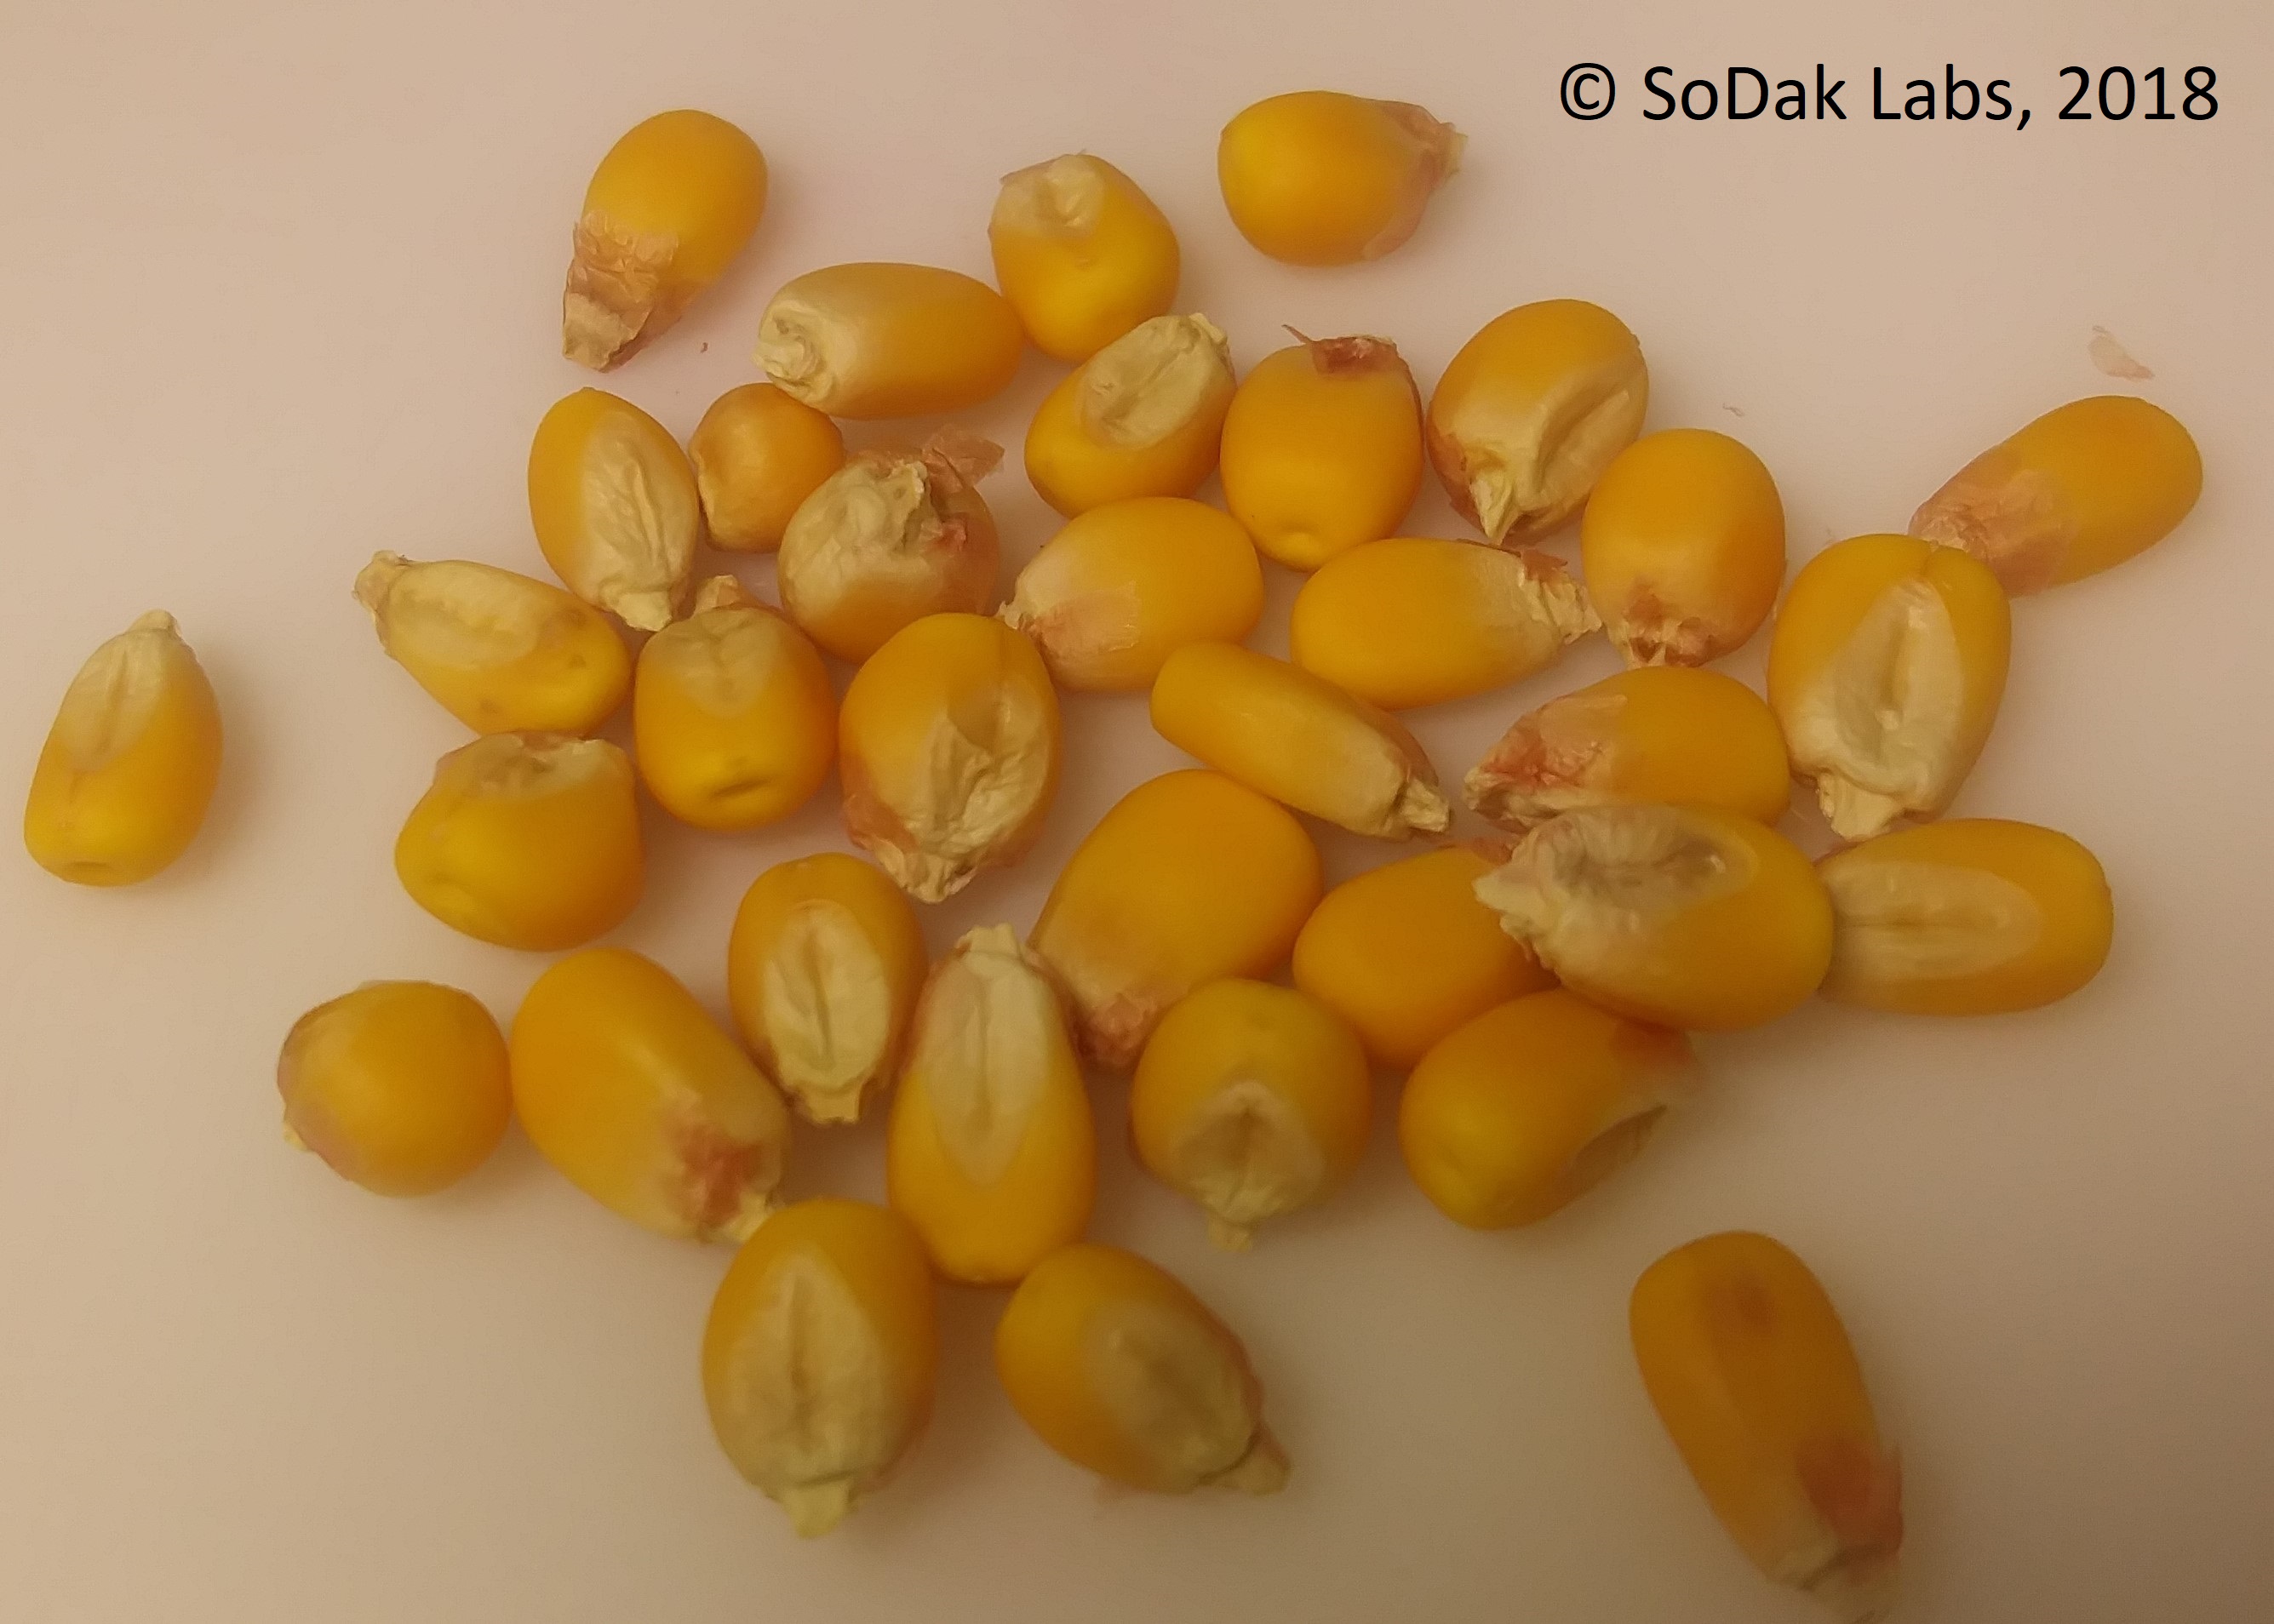 Waxy corn kernels